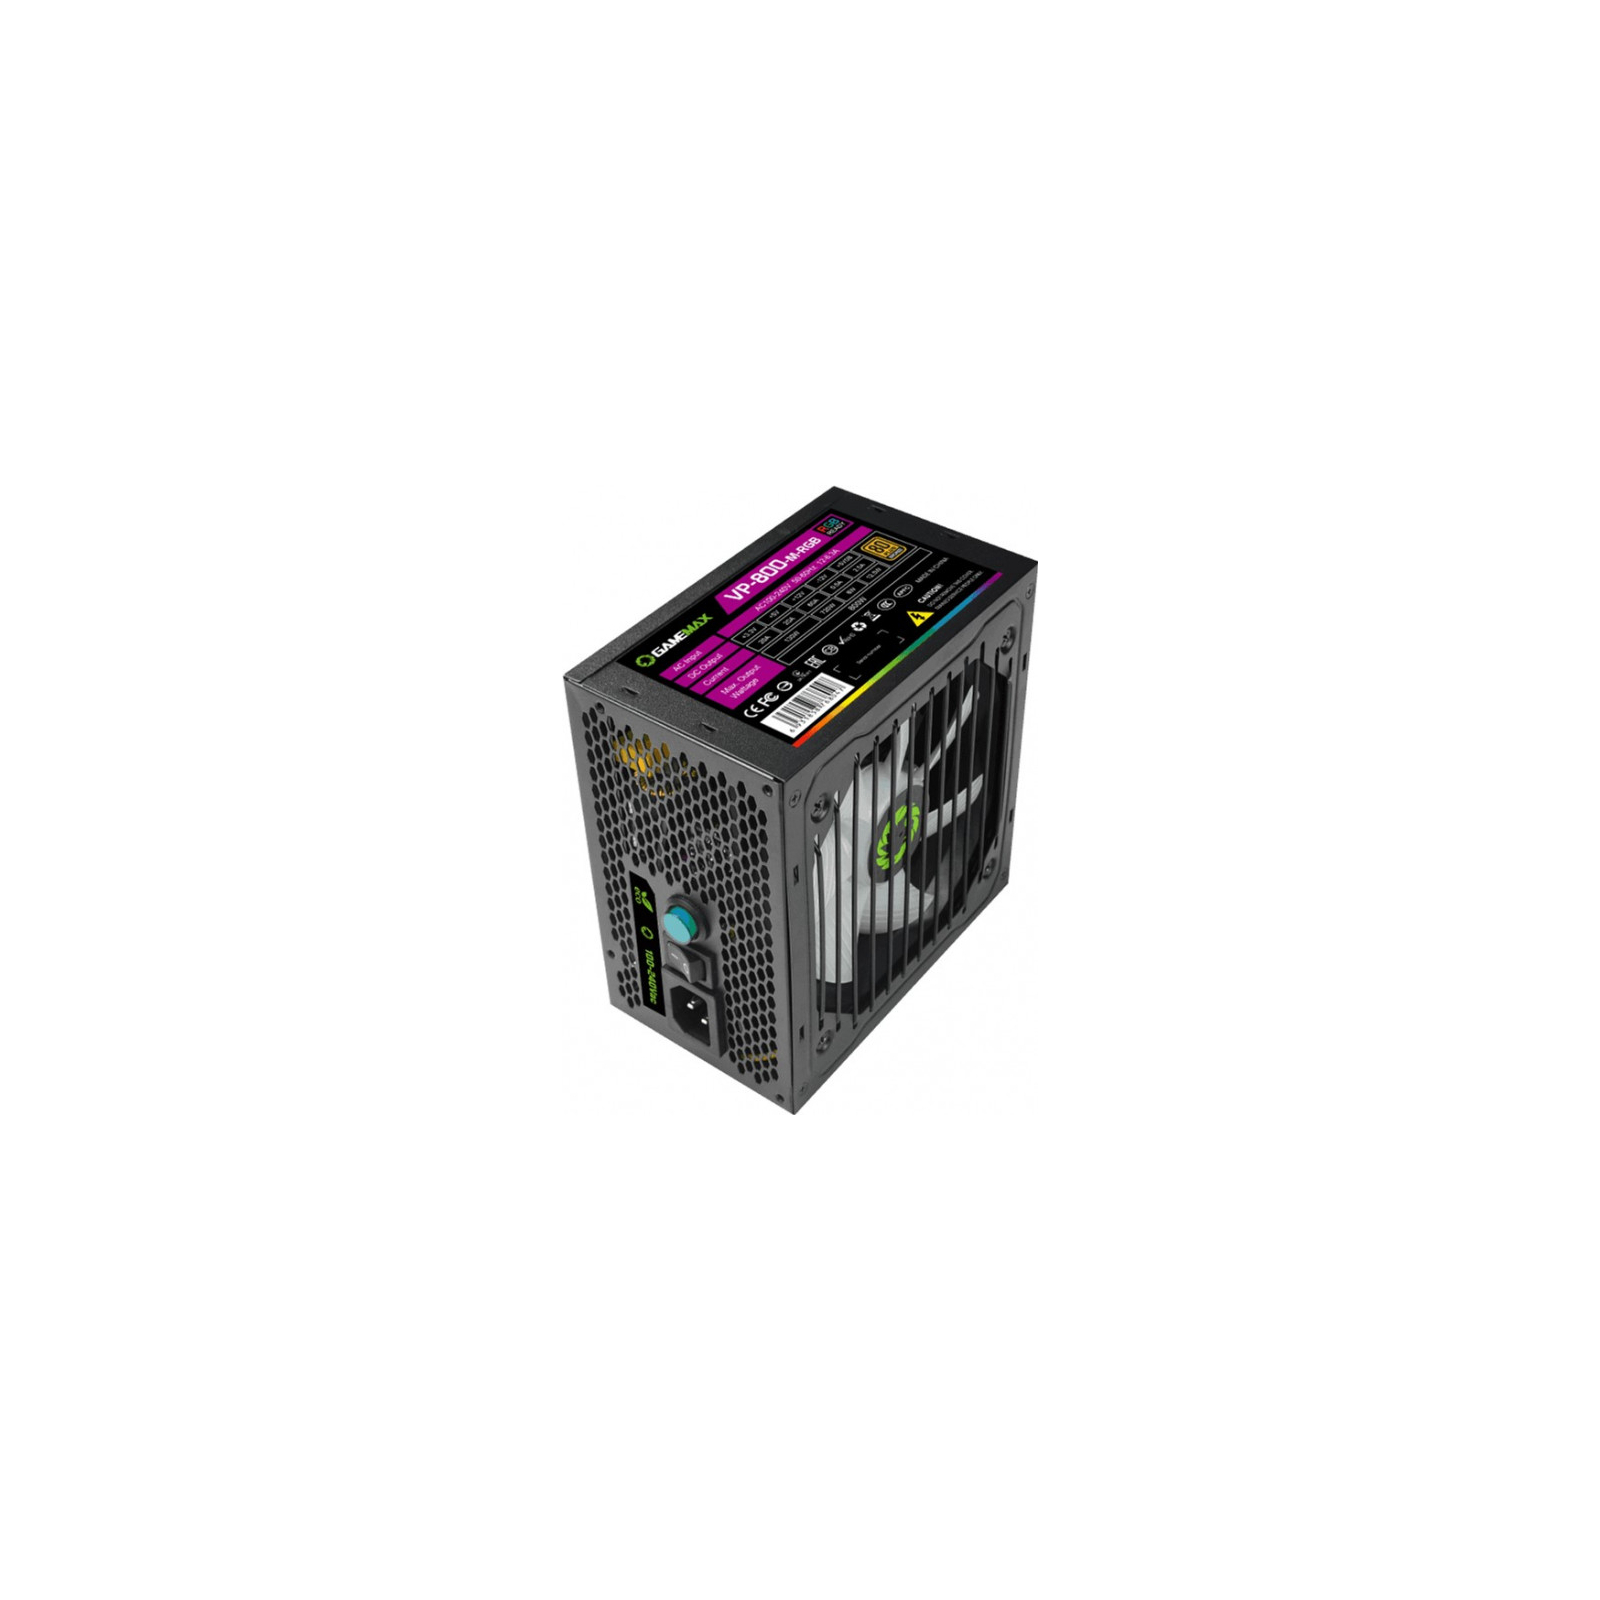 Блок питания Gamemax 800W (VP-800-M-RGB) изображение 7